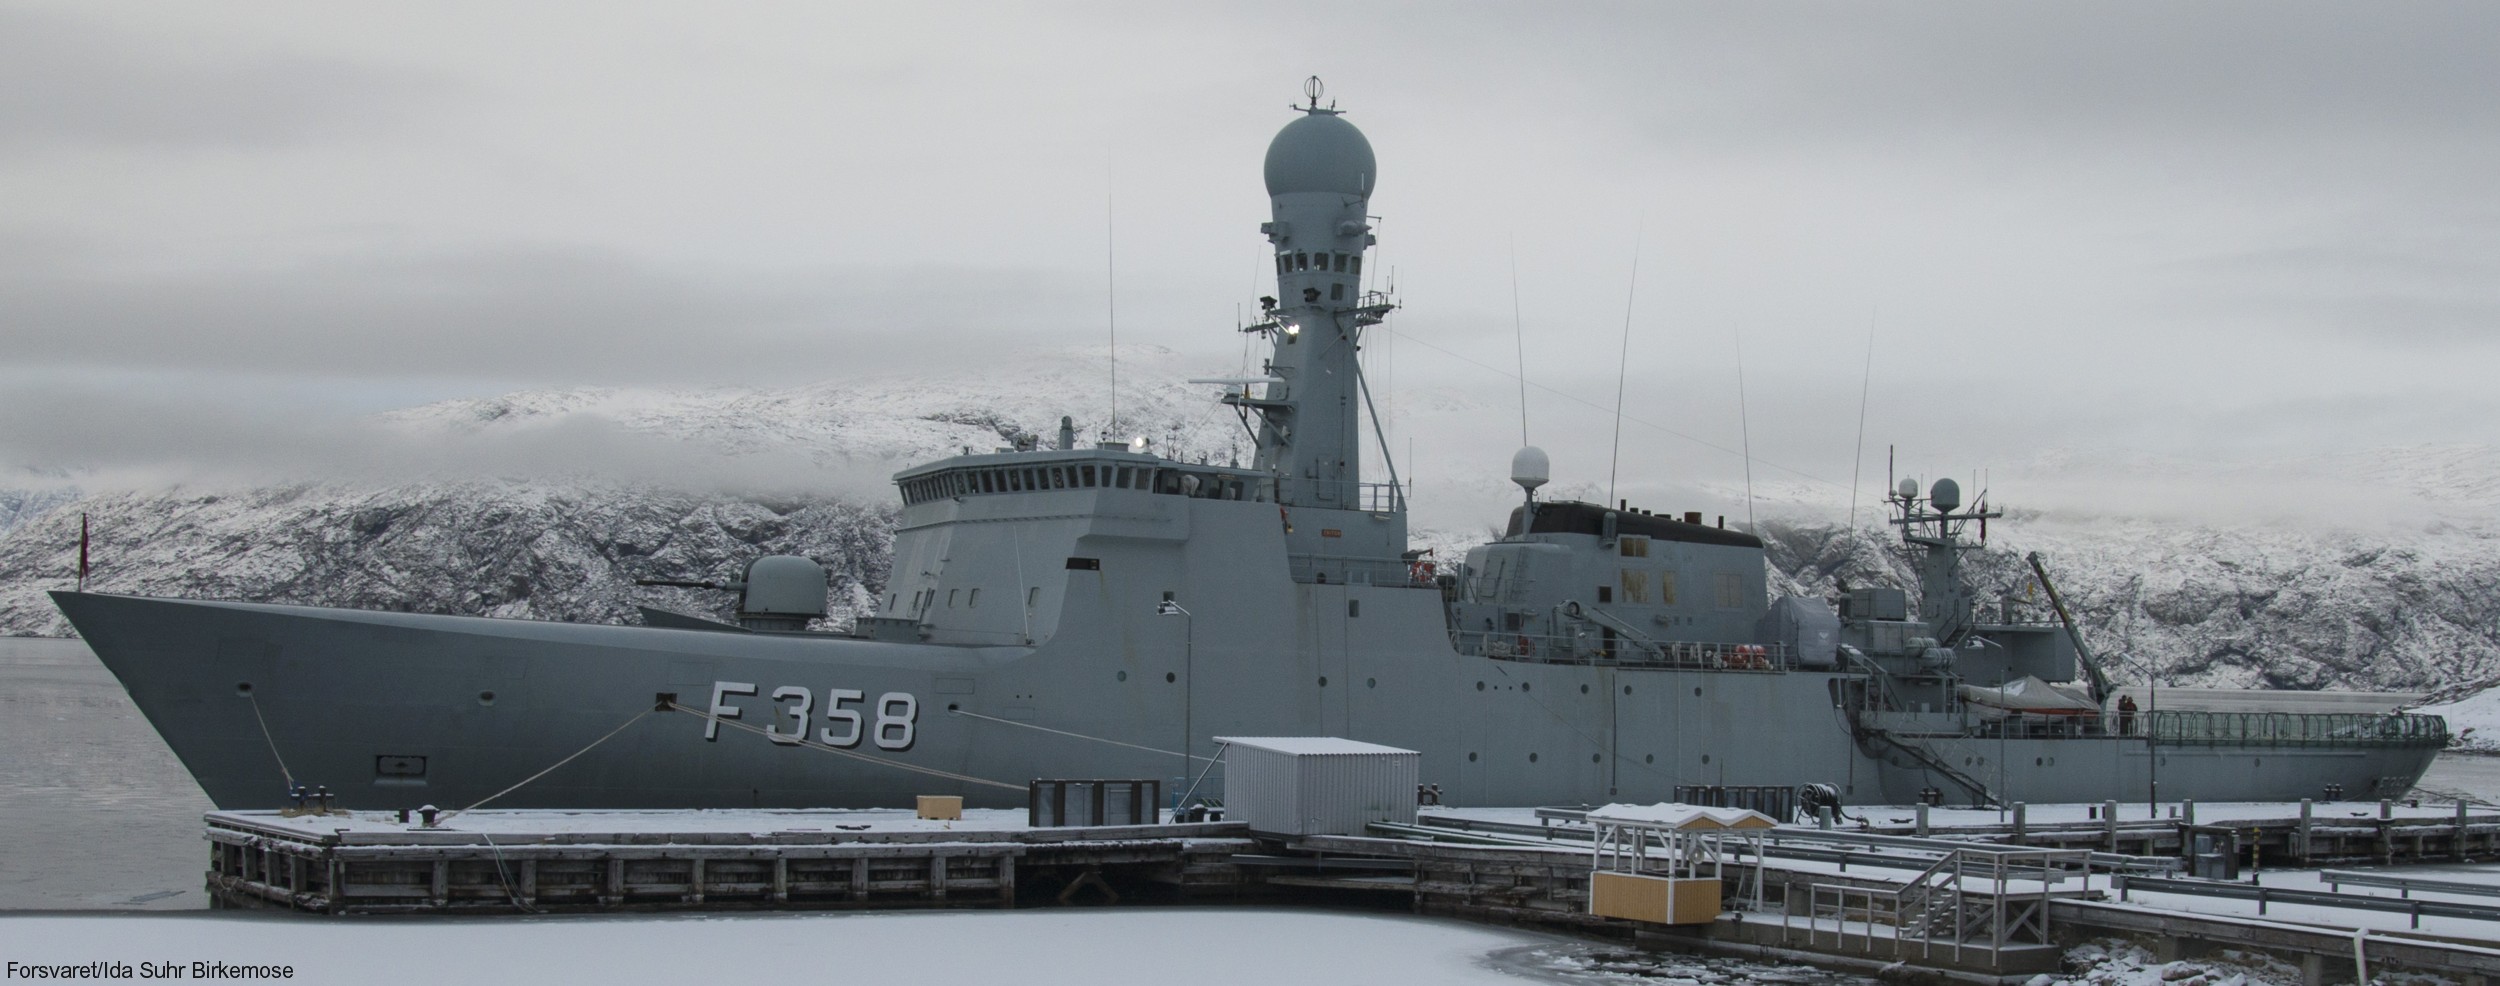 f-358 hdms triton thetis class ocean patrol frigate royal danish navy kongelige danske marine kdm inspektionsskibet 11